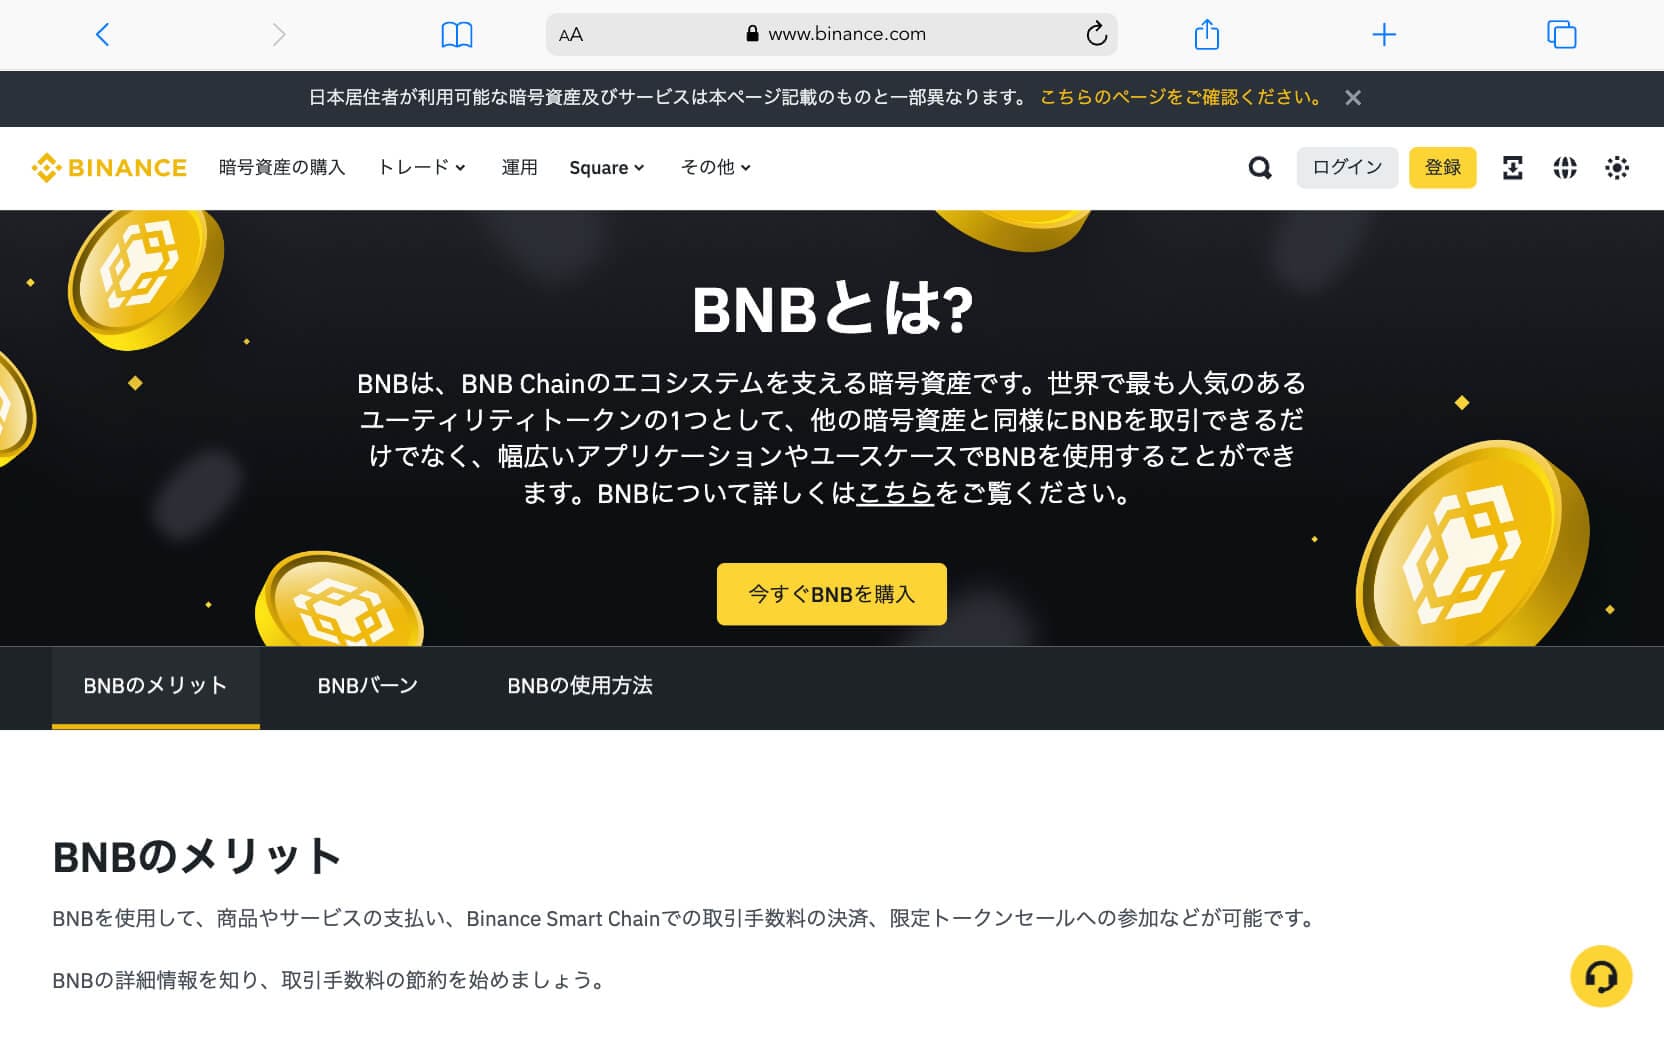 BNBの公式サイト - トップページ